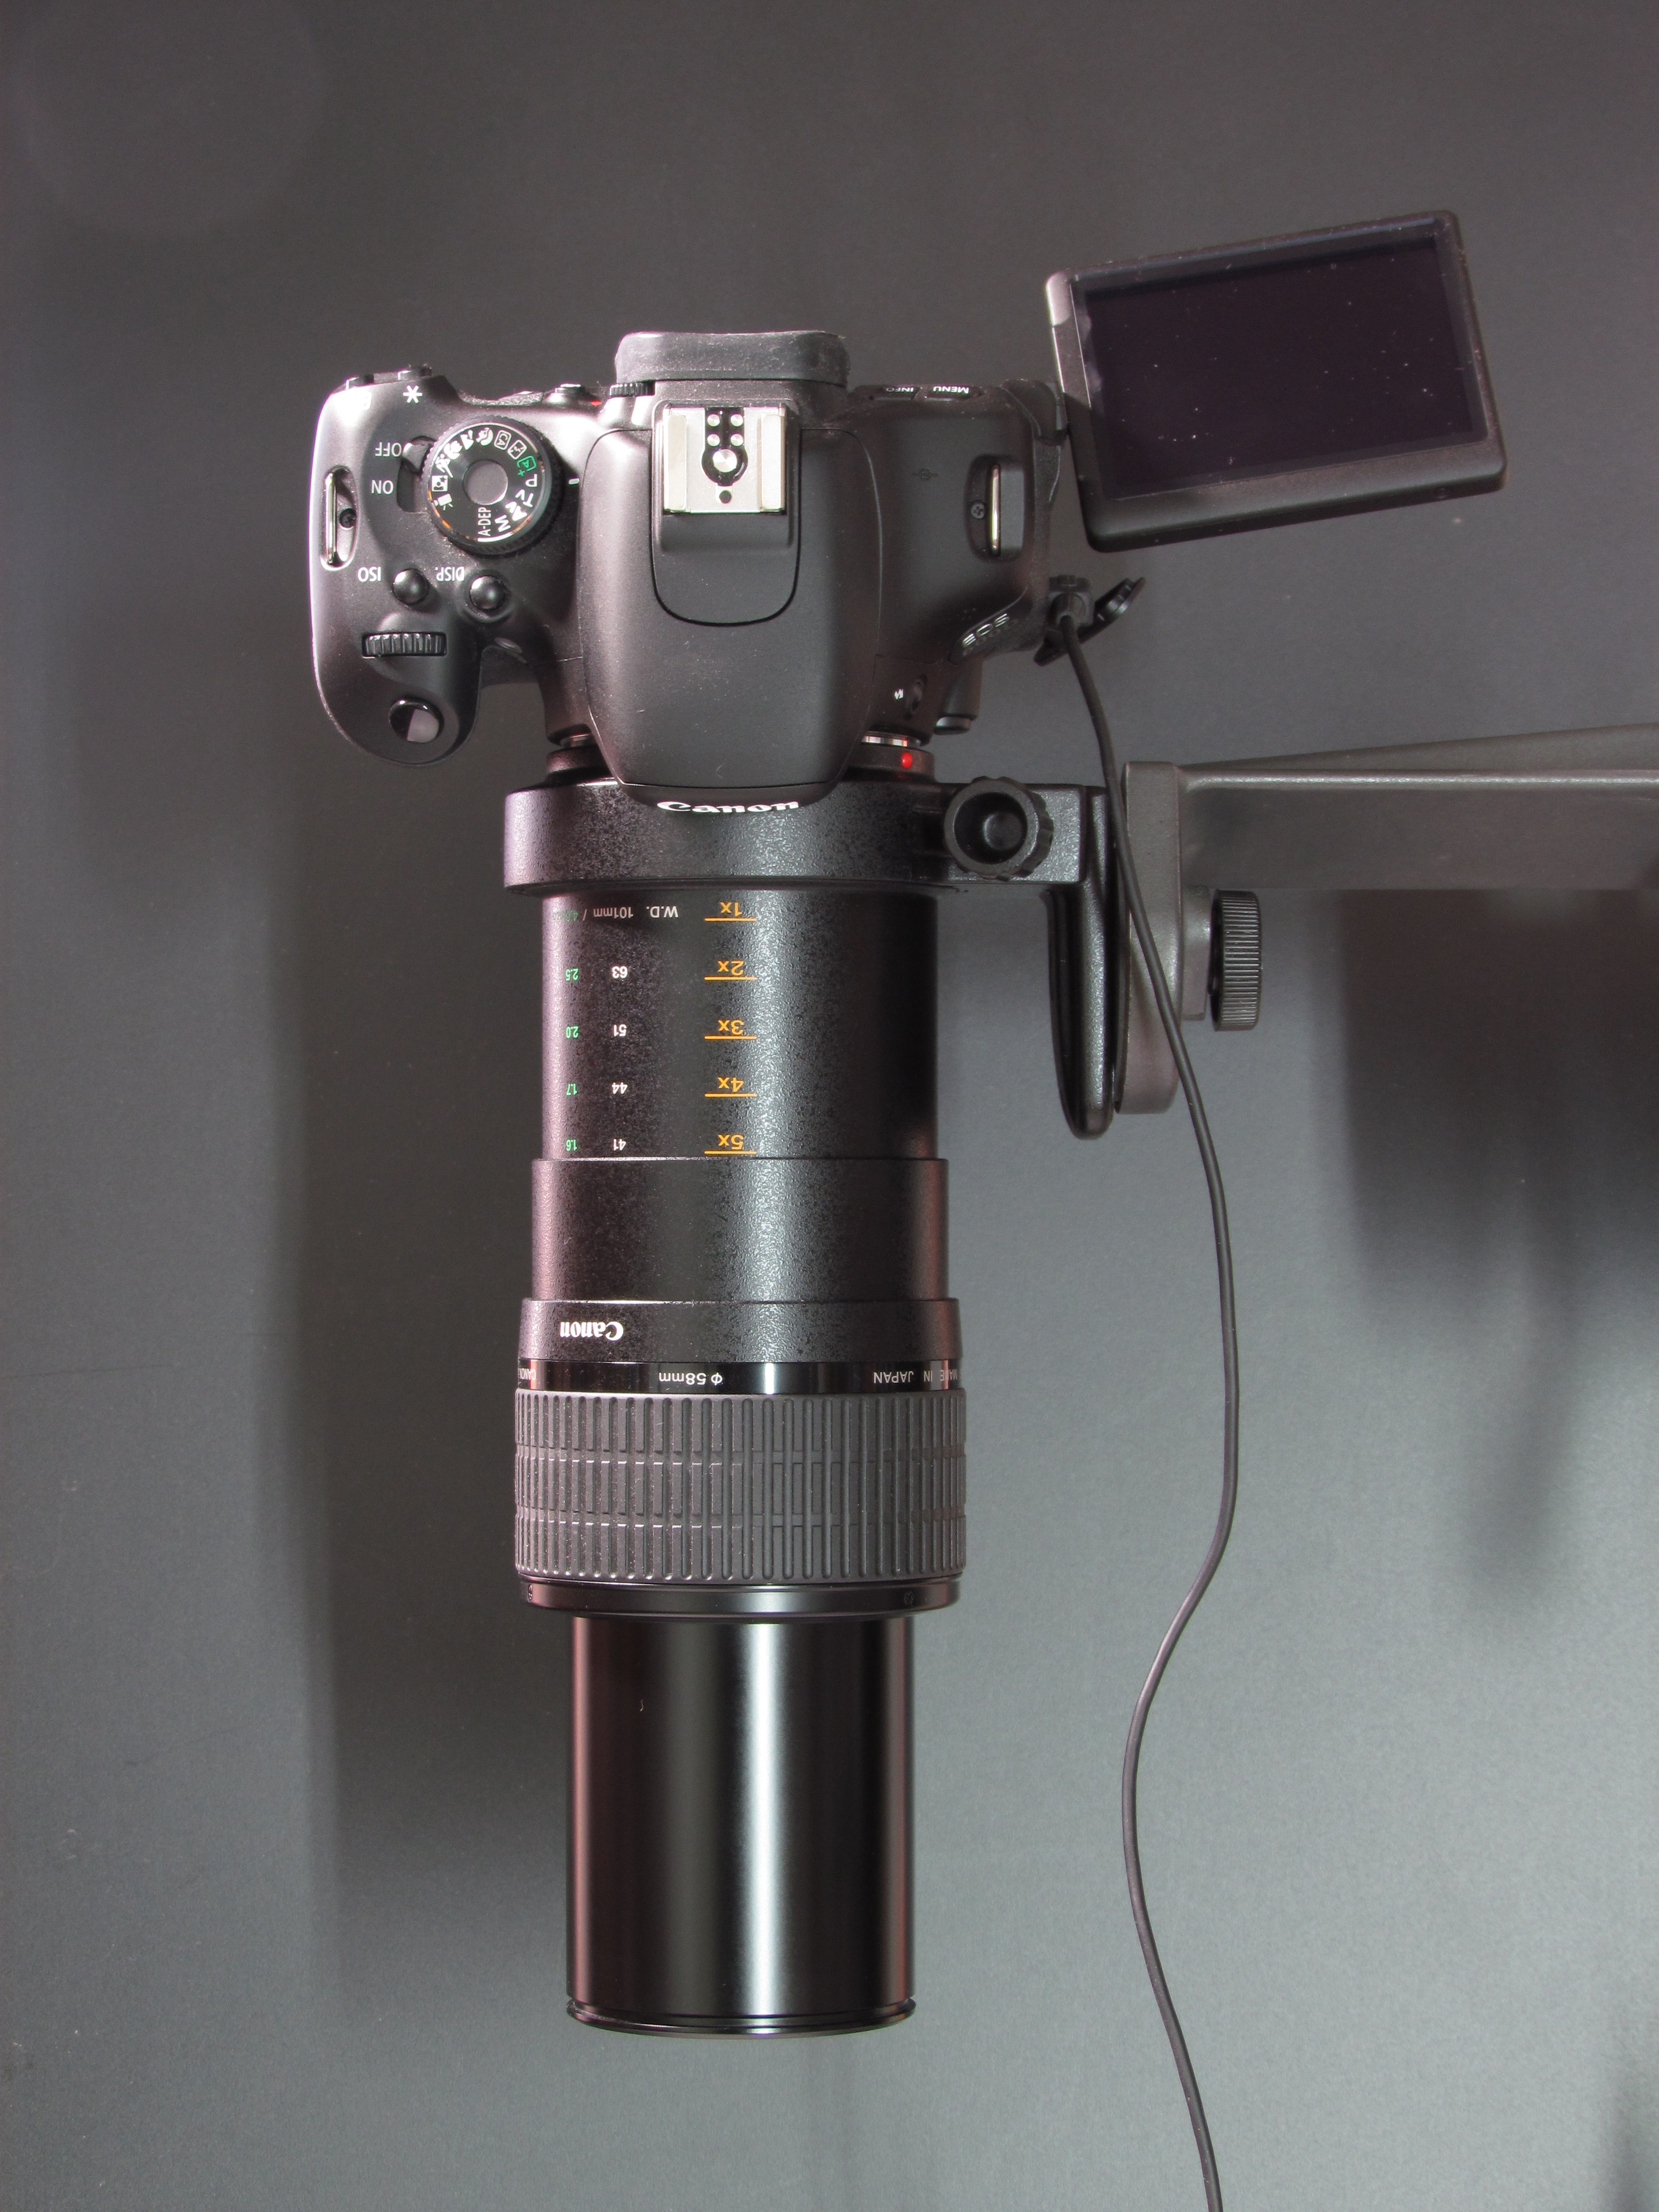 File:Canon Objektiv MP-E 65mm mit Kamera EOS (fcm).jpg - Wikimedia Commons